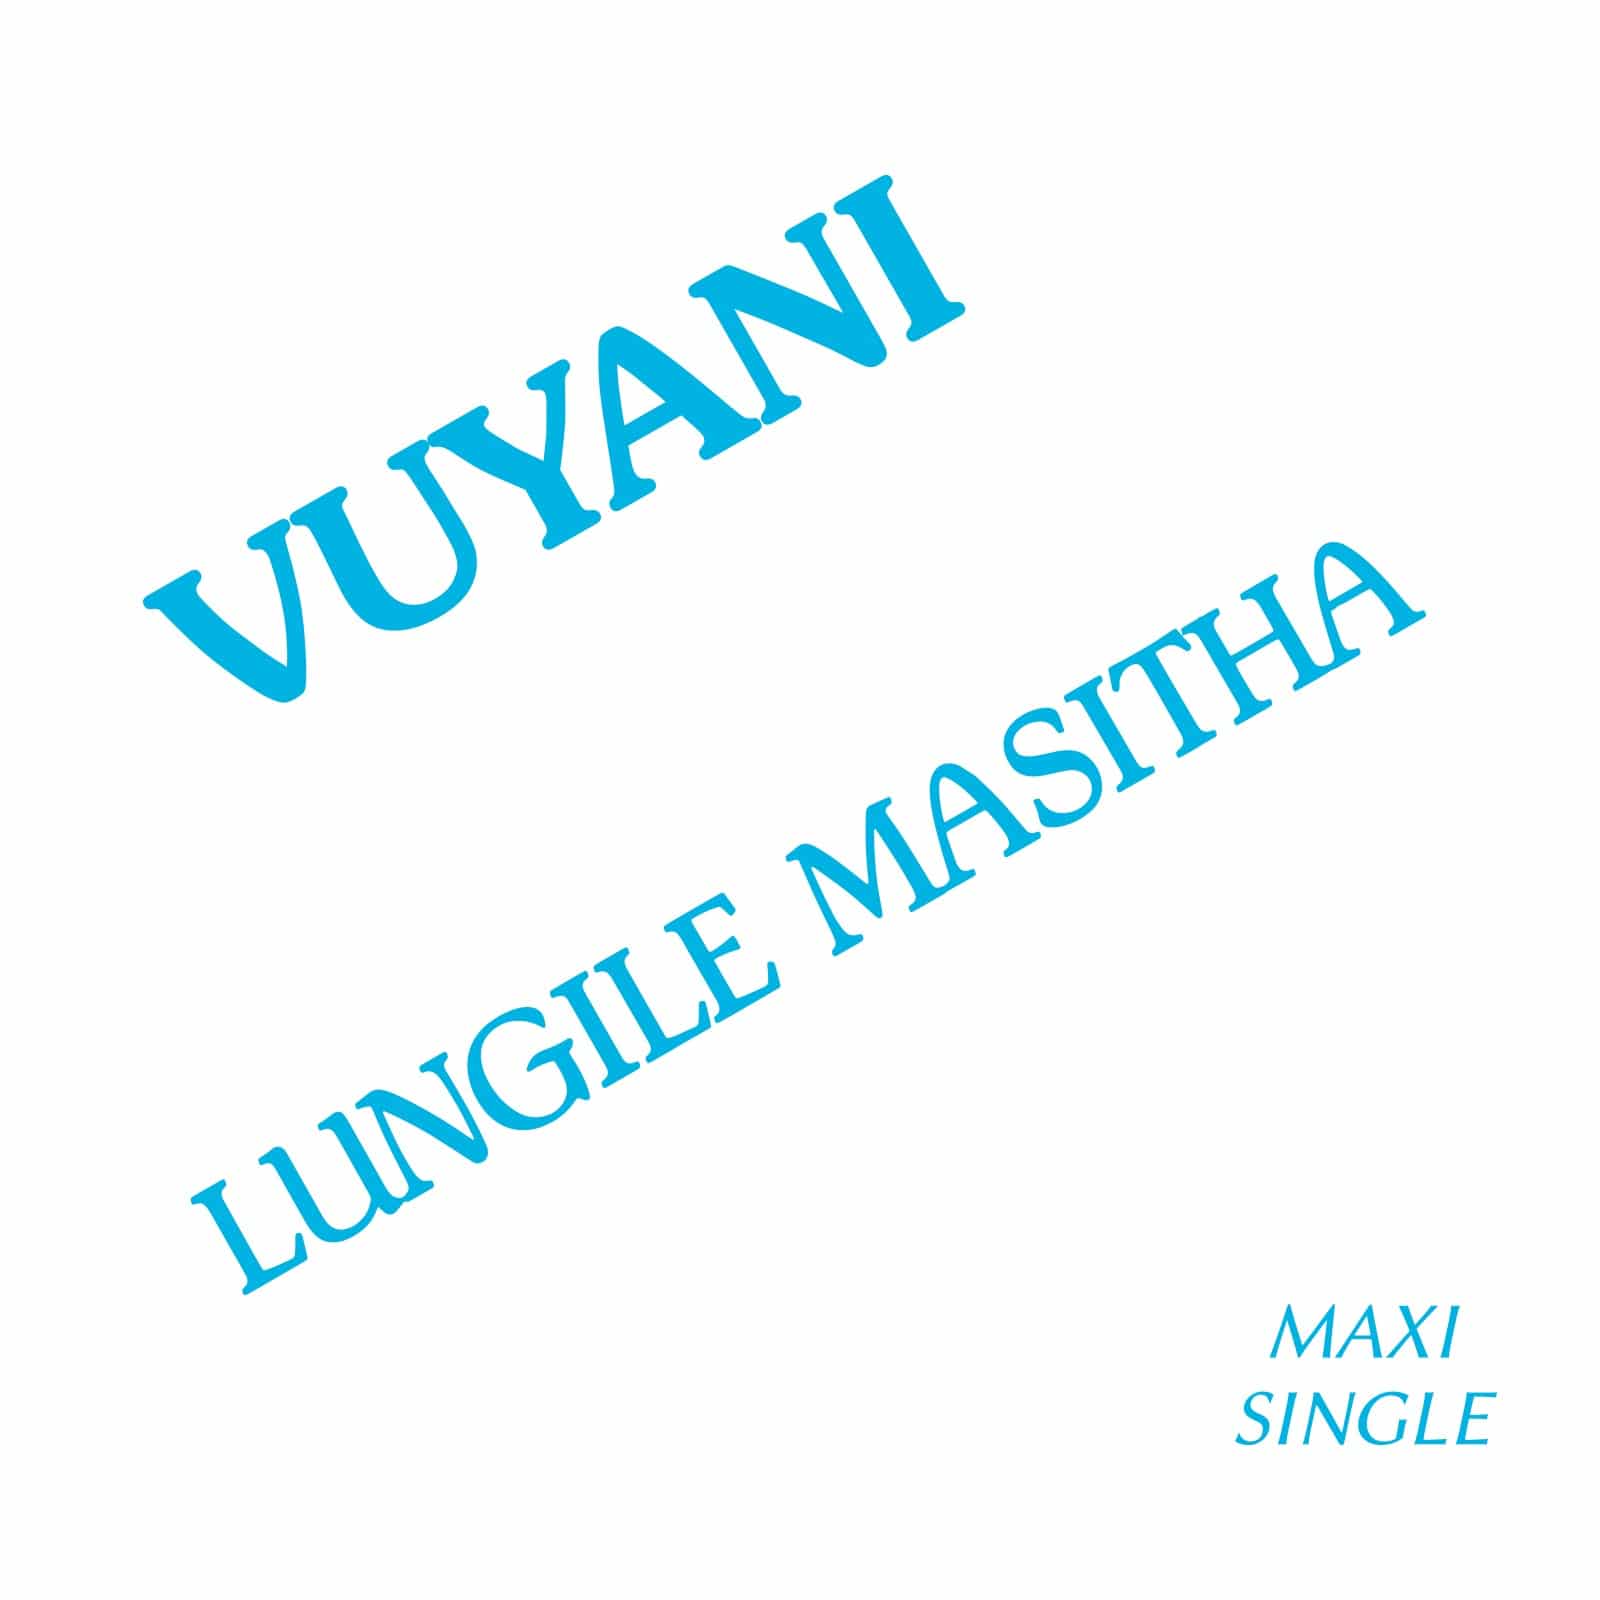 Lungile Masitha - Vuyani - LER1017 - LEFT EAR RECORDS